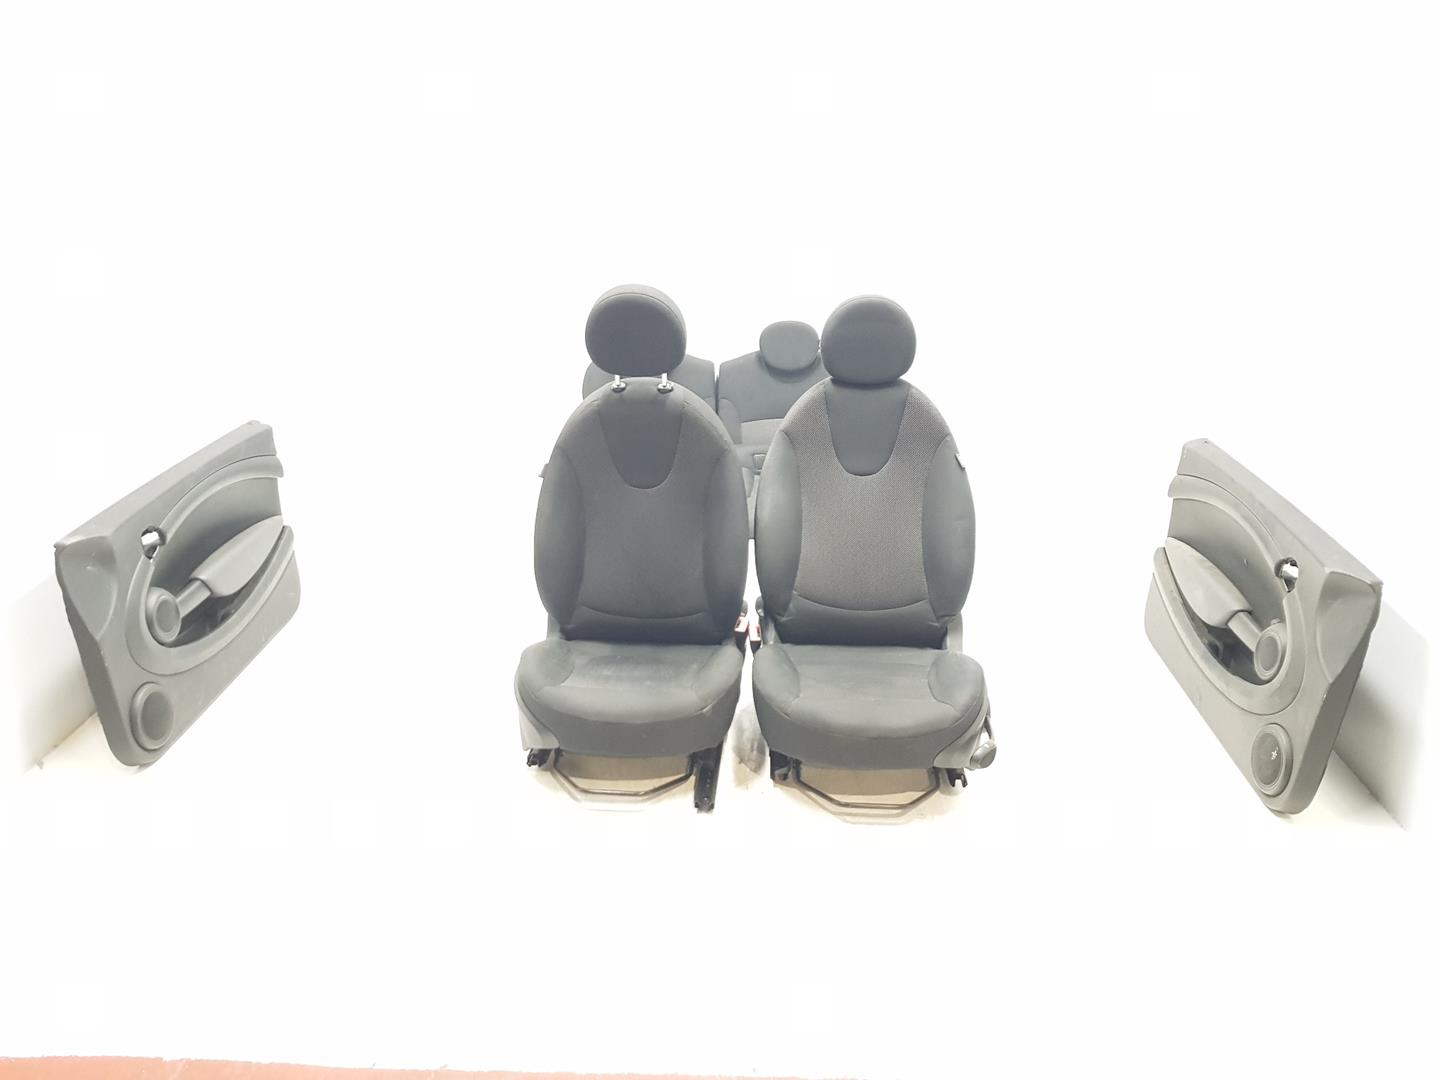 MINI Cooper R56 (2006-2015) Seats ASIENTOSTELA, ASIENTOSMANUALES, CONPANELES 19905968